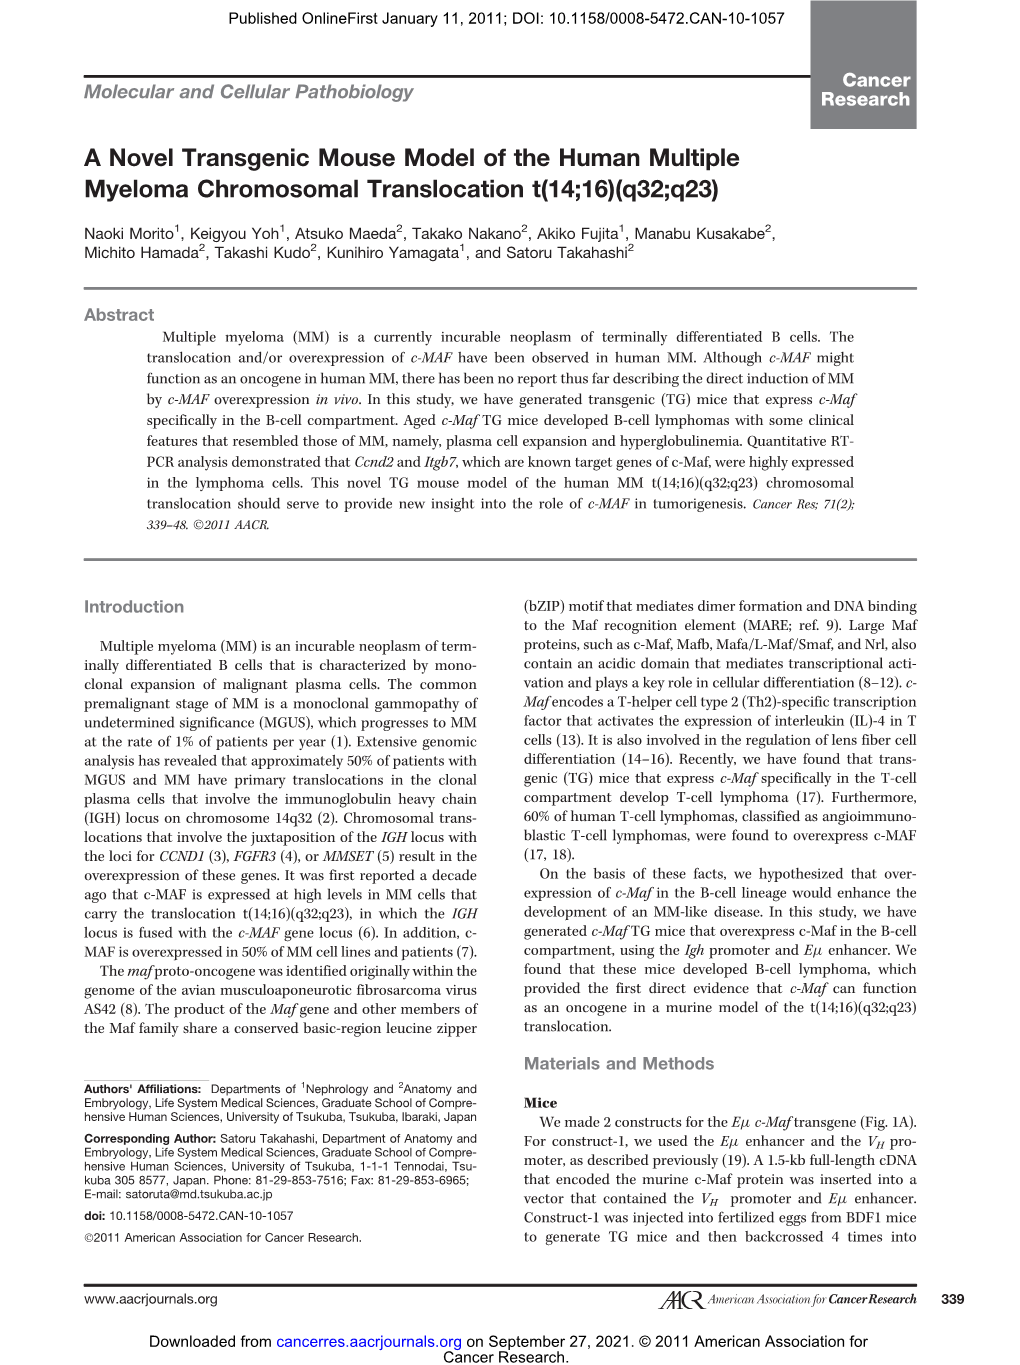 A Novel Transgenic Mouse Model of the Human Multiple Myeloma Chromosomal Translocation T(14;16)(Q32;Q23)